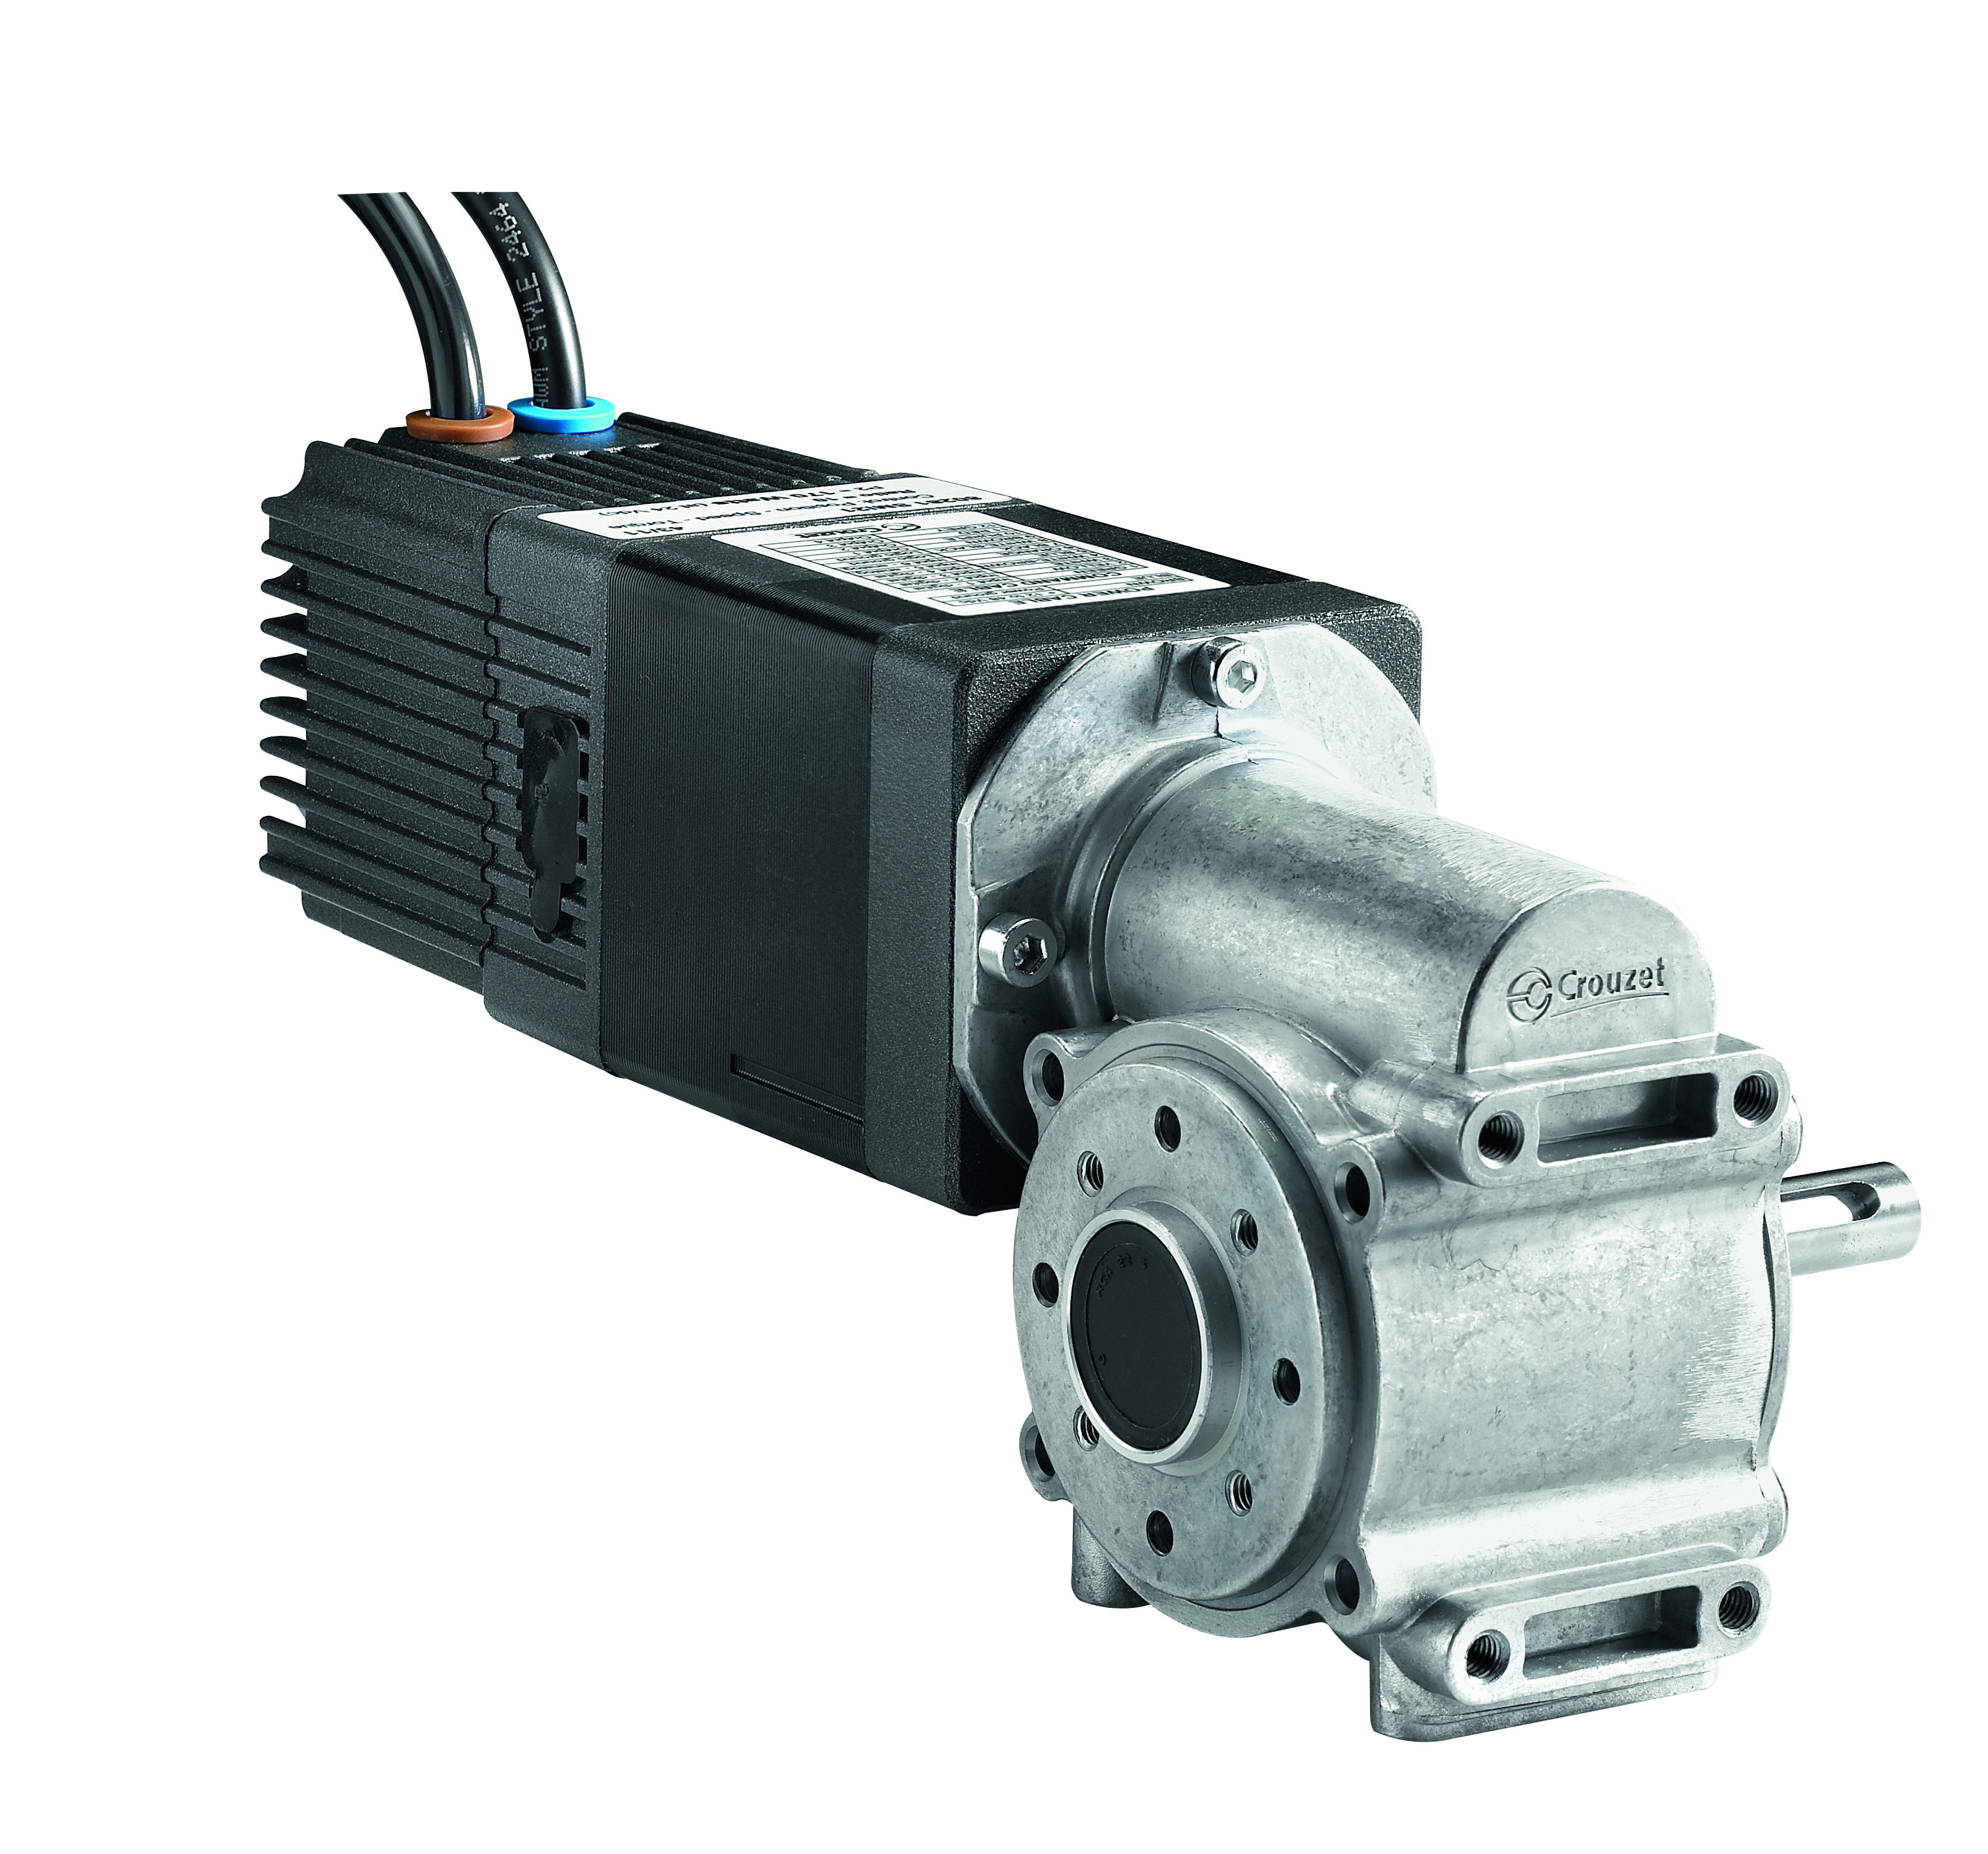 SQ57 Motor 150W 12-32Vdc + Drive TNi21 0-10V + Gearbox RAD10 ratio 20-1